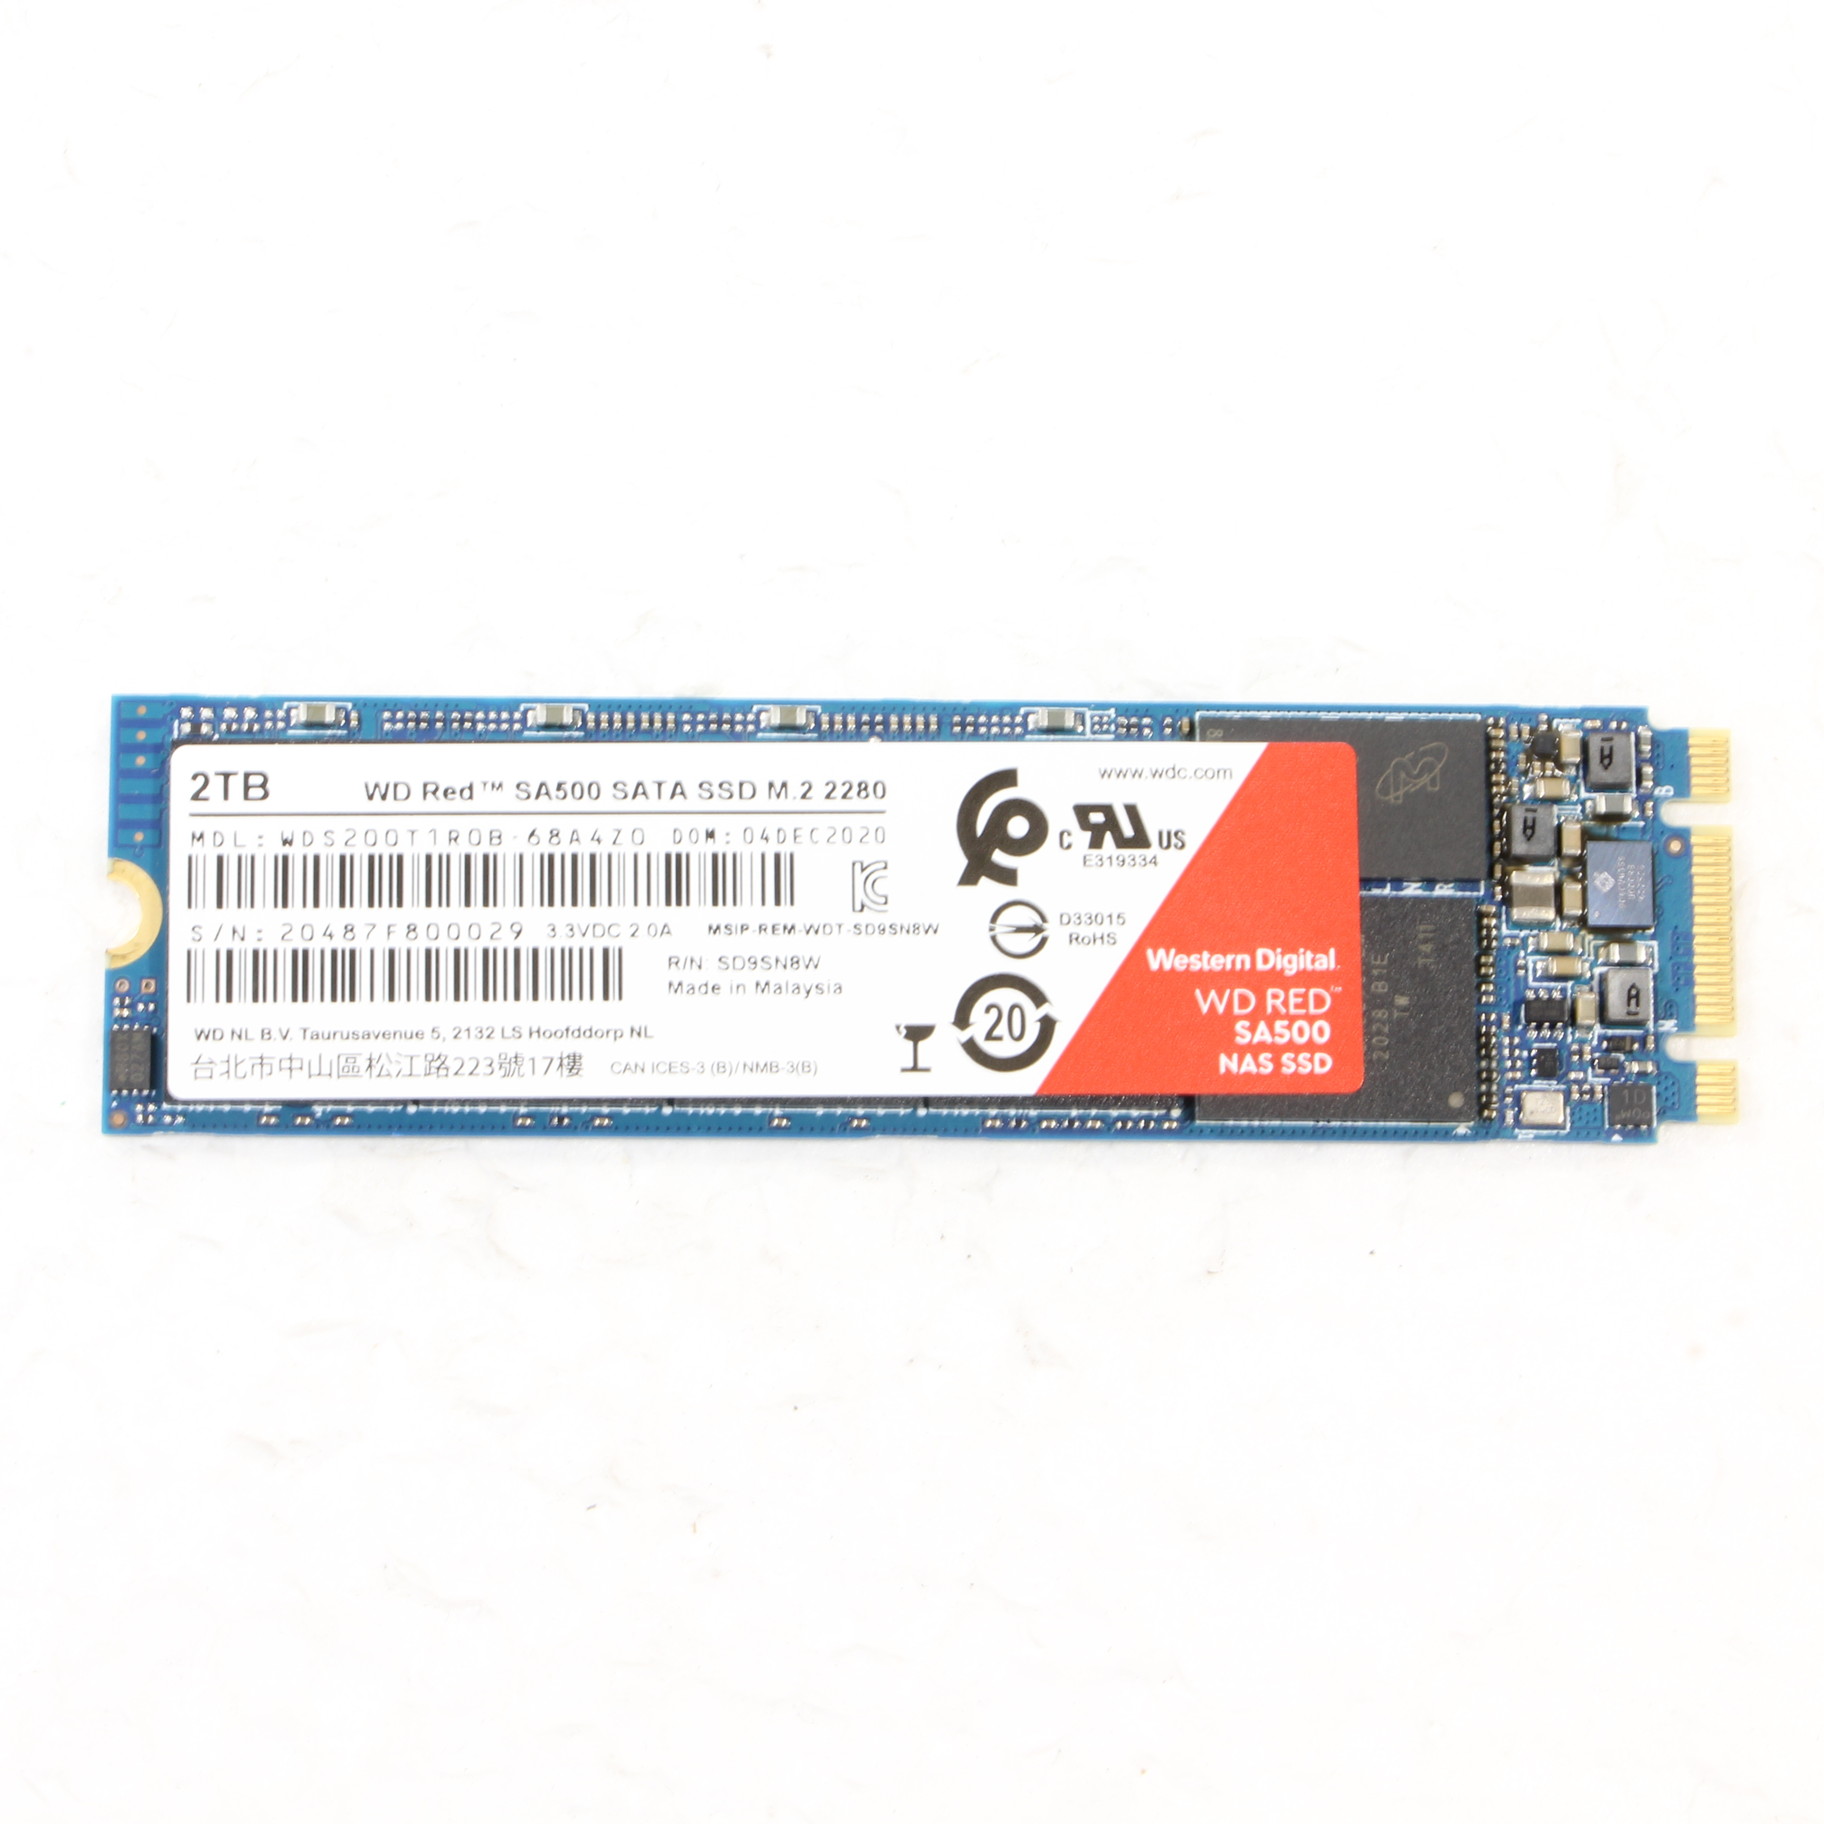 WD Red SA500 2TB SSD M.2 2280 美品